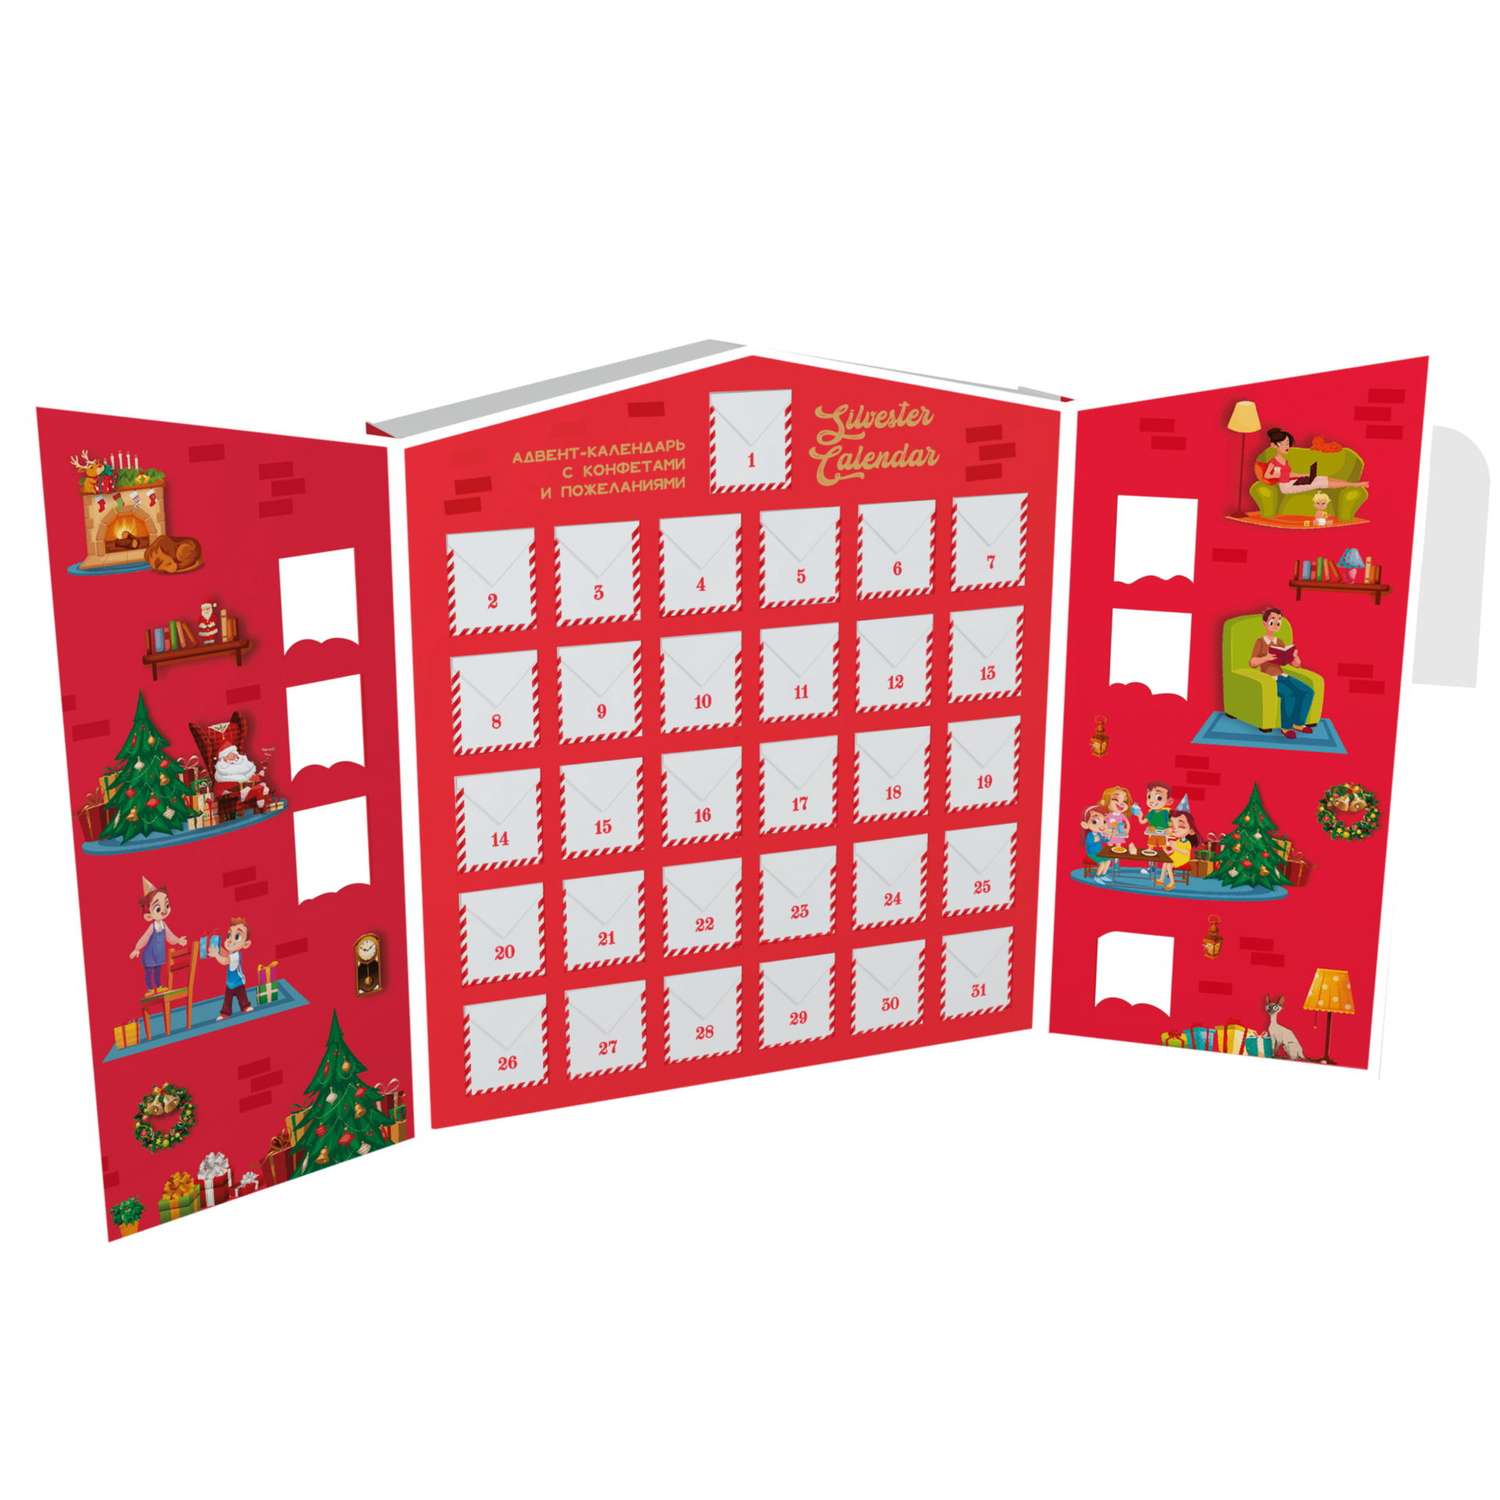 Адвент-календарь с конфетами Silvester Calendar с пожеланиями - фото 2